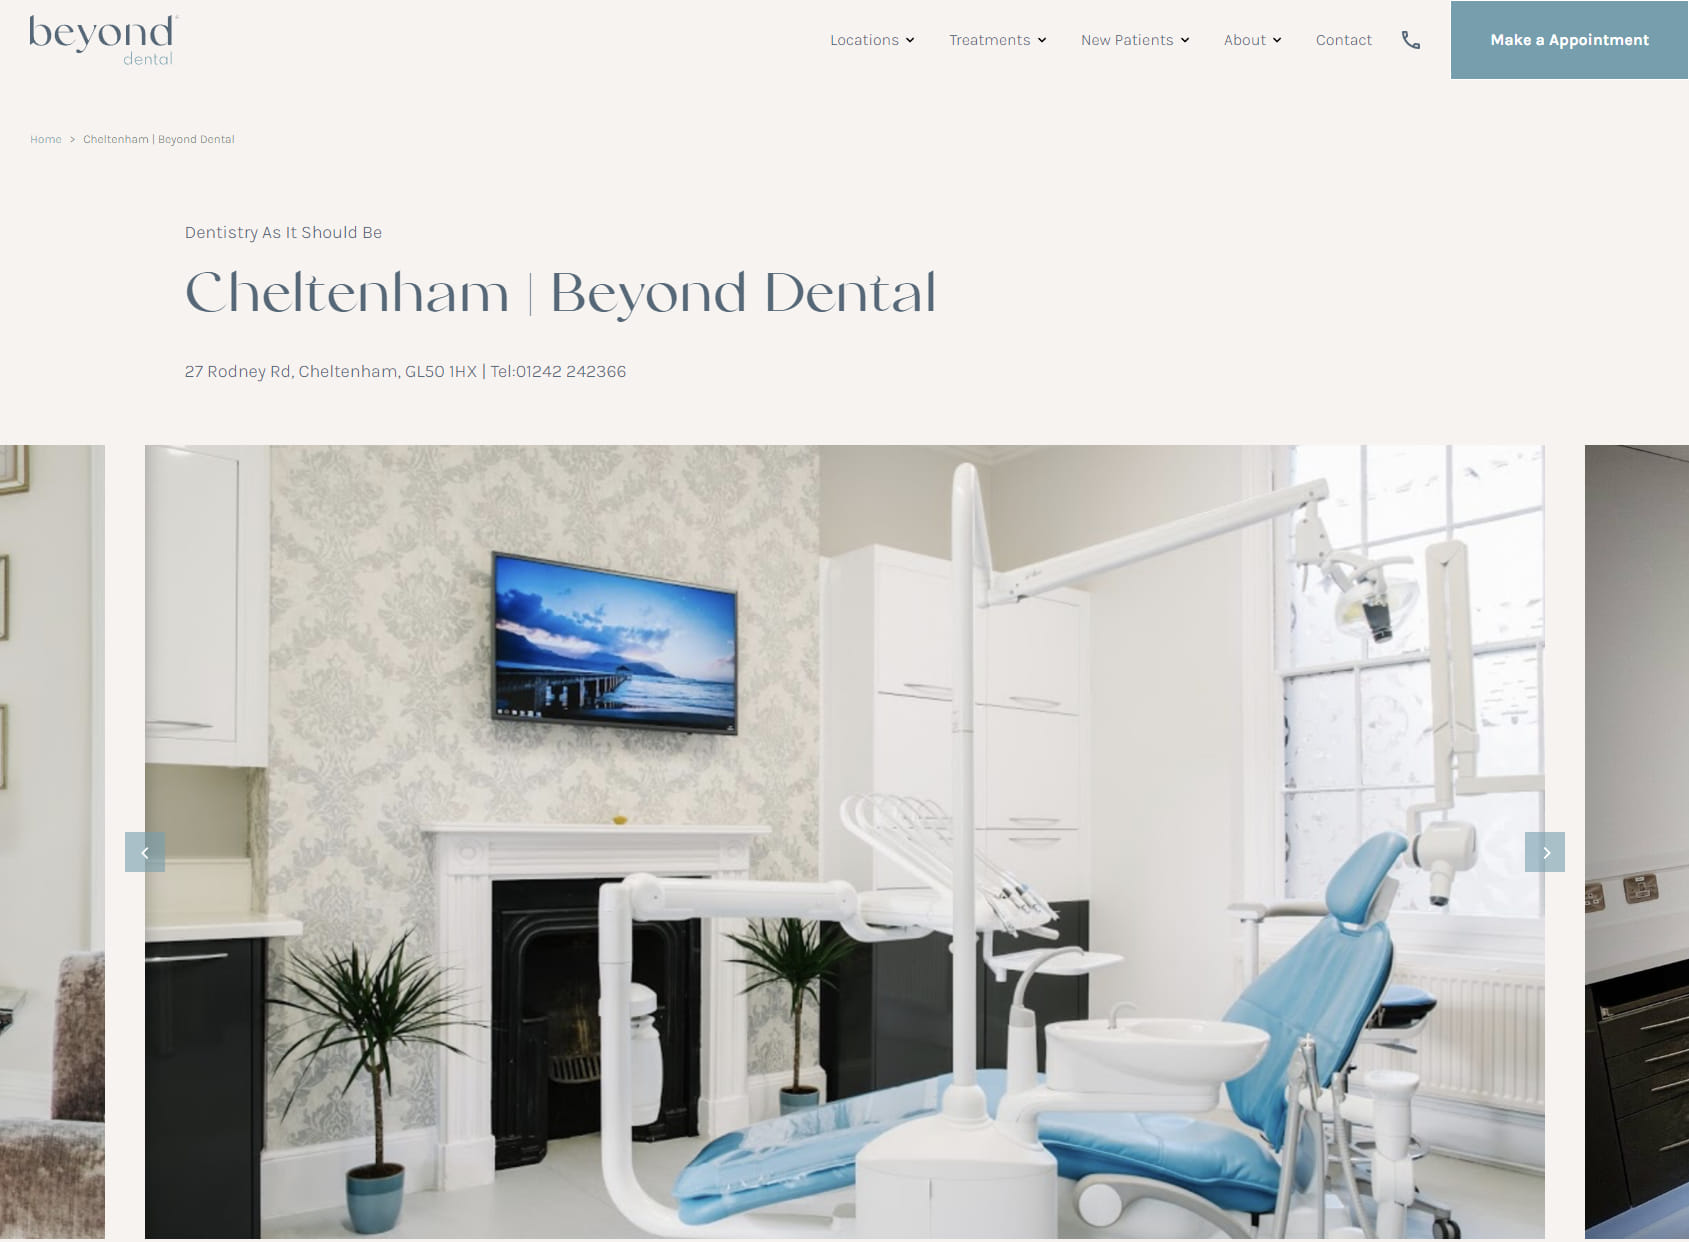 Beyond Dental Cheltenham